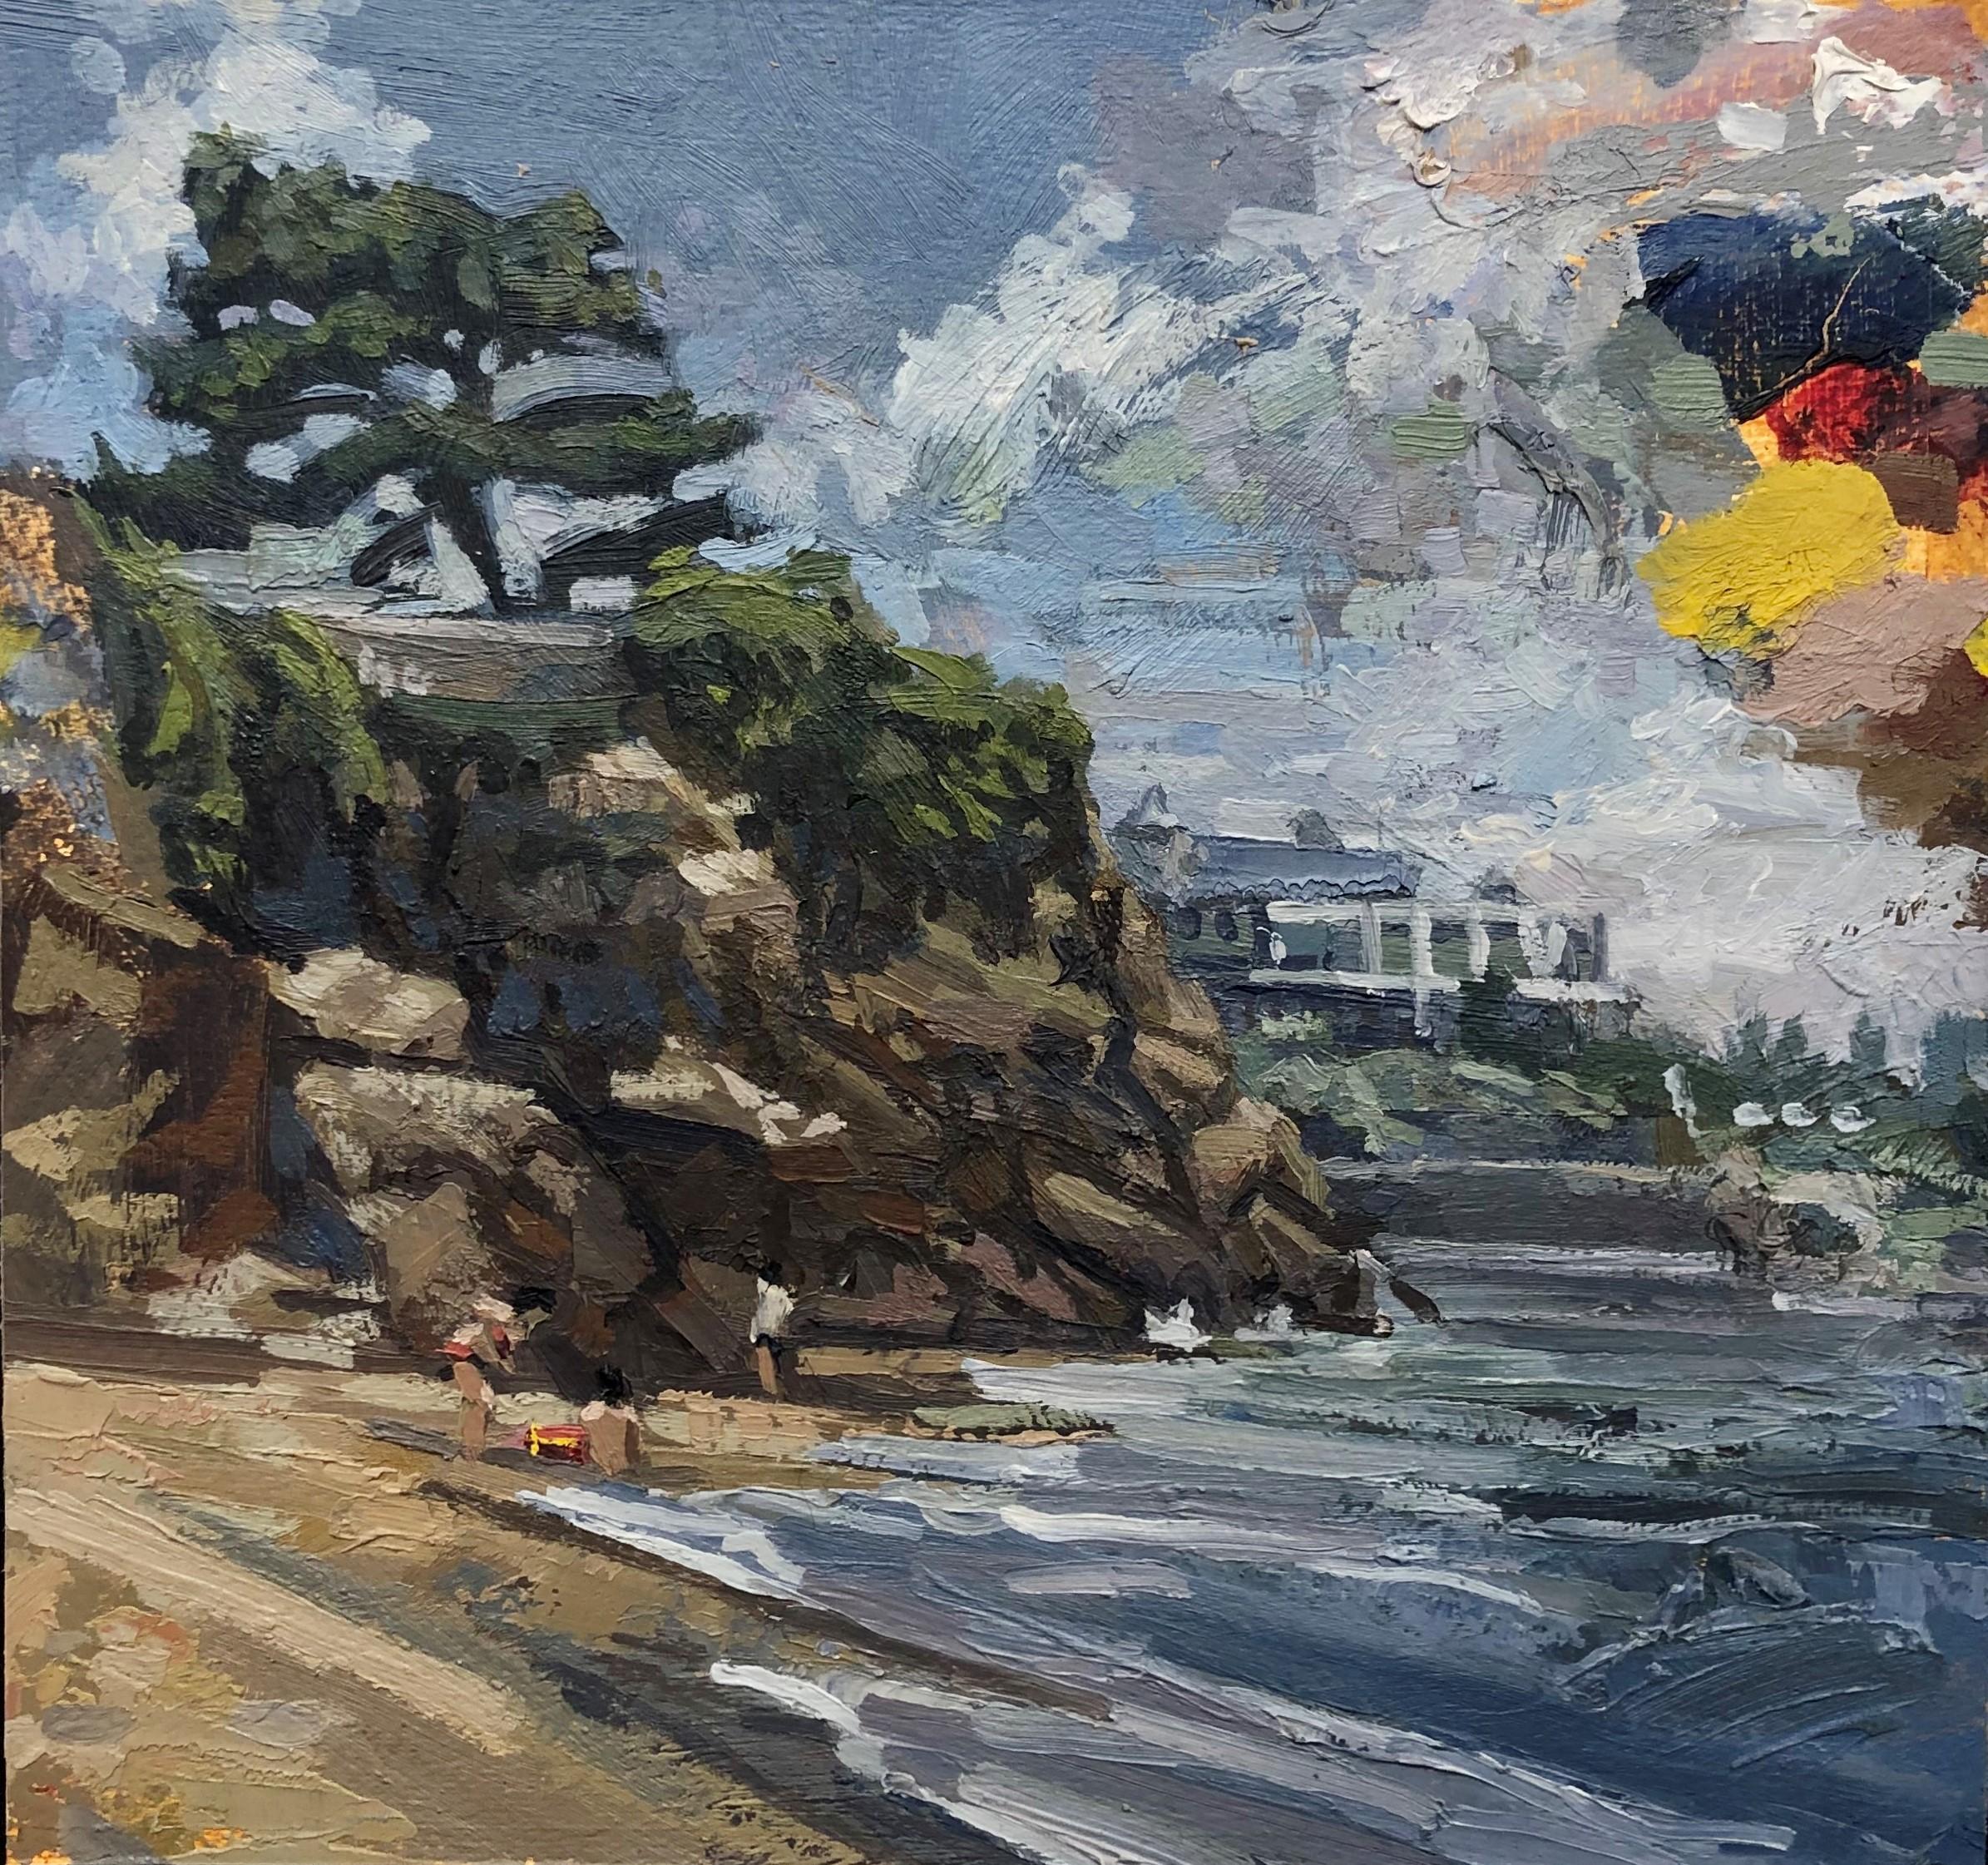 Benjamin Duke Landscape Painting - The Beach in Dinard, France - Seaside Landscape with Rocky Cliffs, Oil on Panel